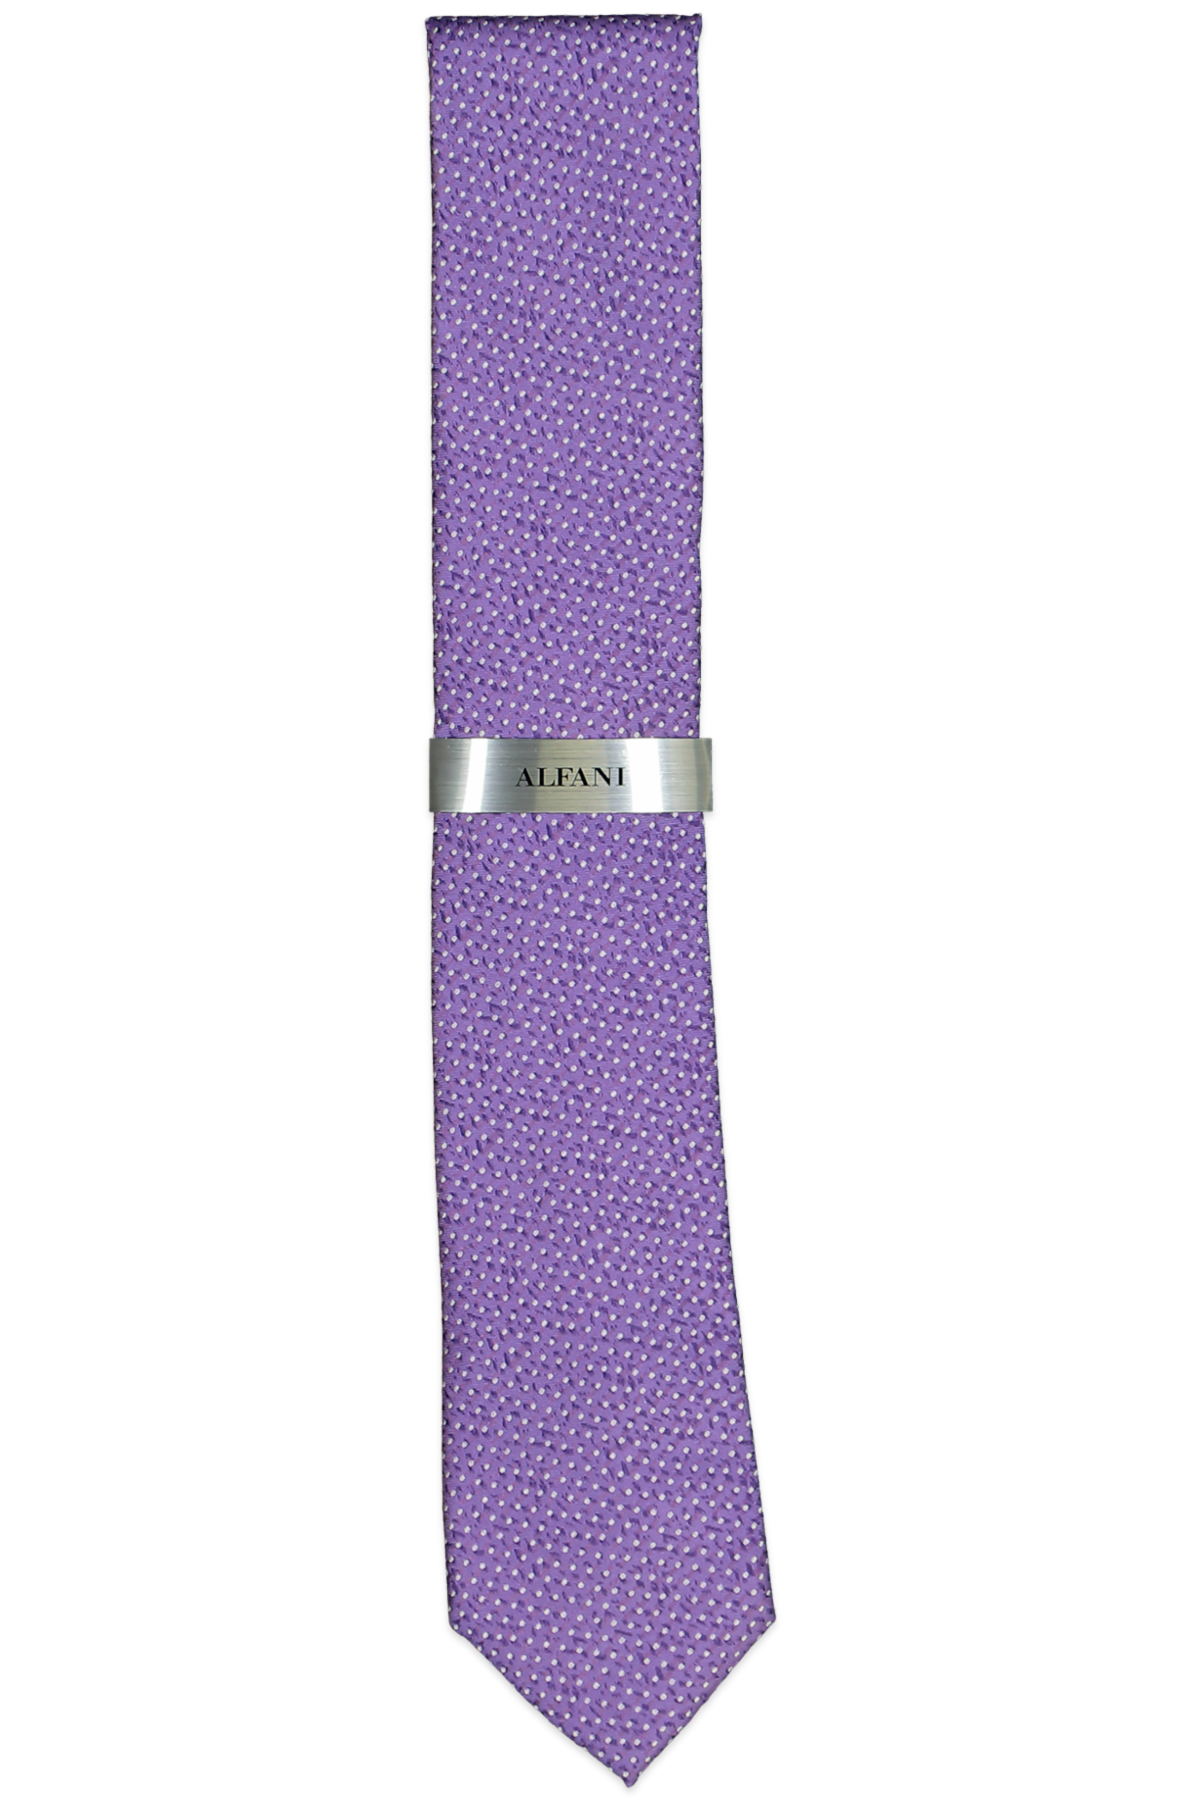 Alfani Slim Abstract Dot Tie Purple